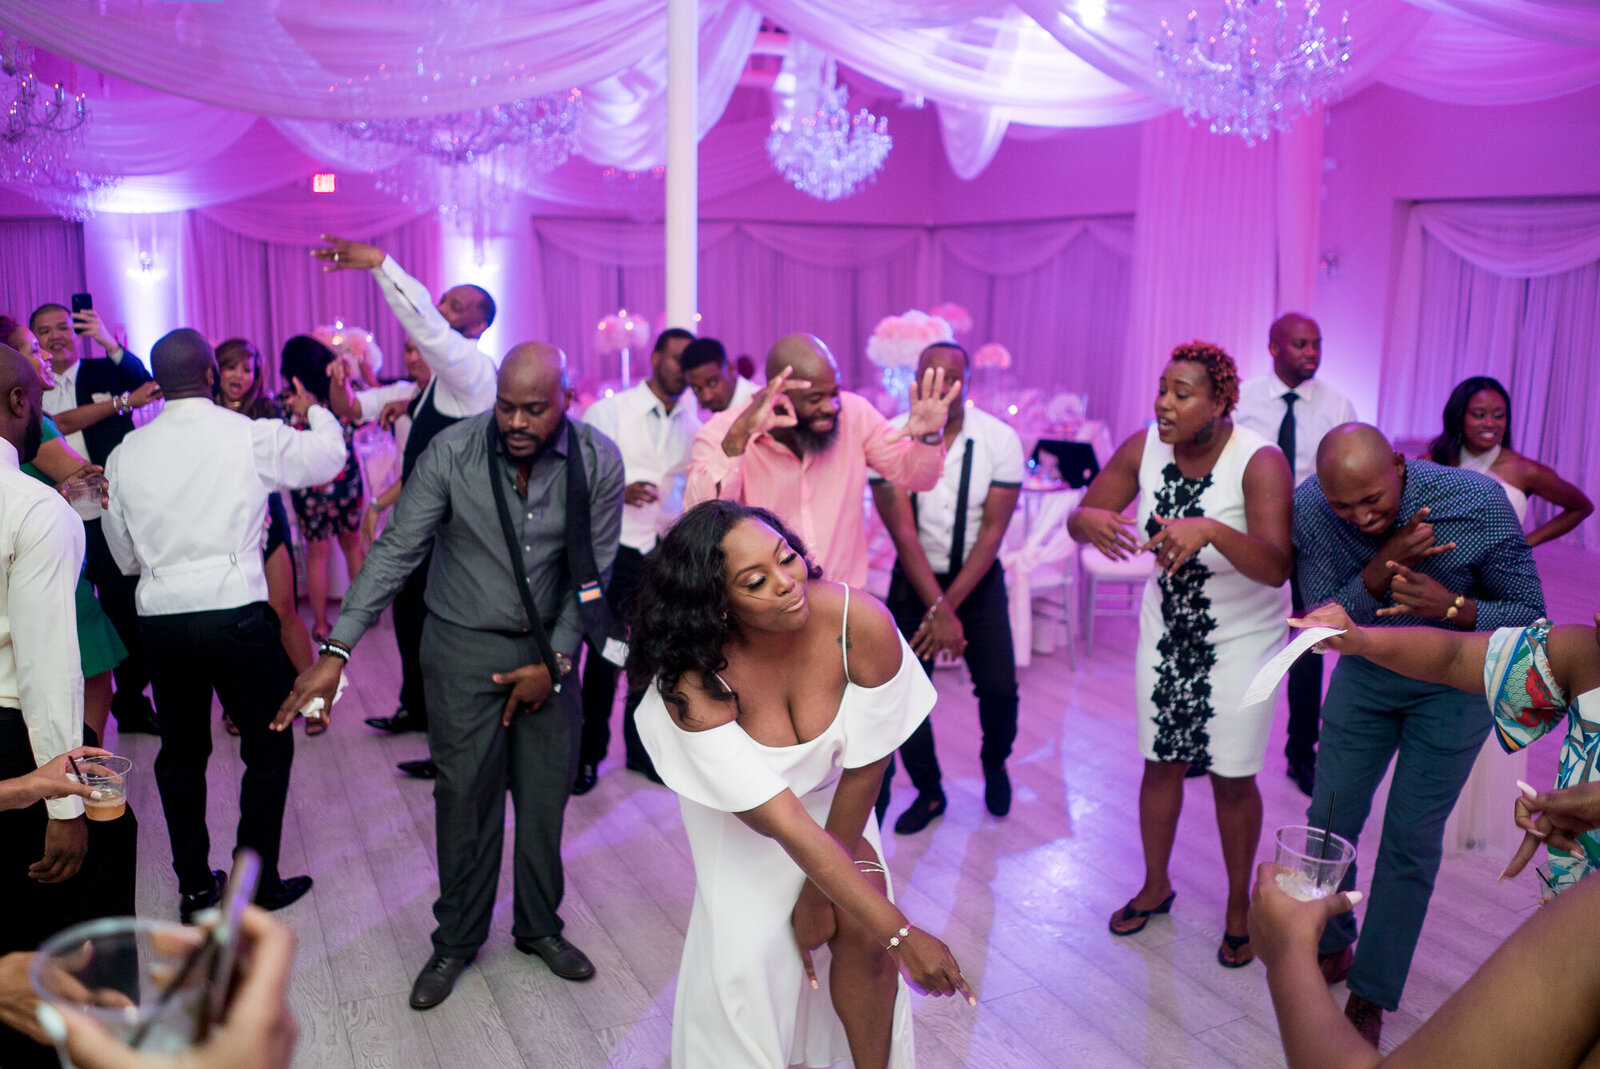 Crystal Ballroom Clearwater Wedding - Miami Wedding Photography - Ashley Canay134